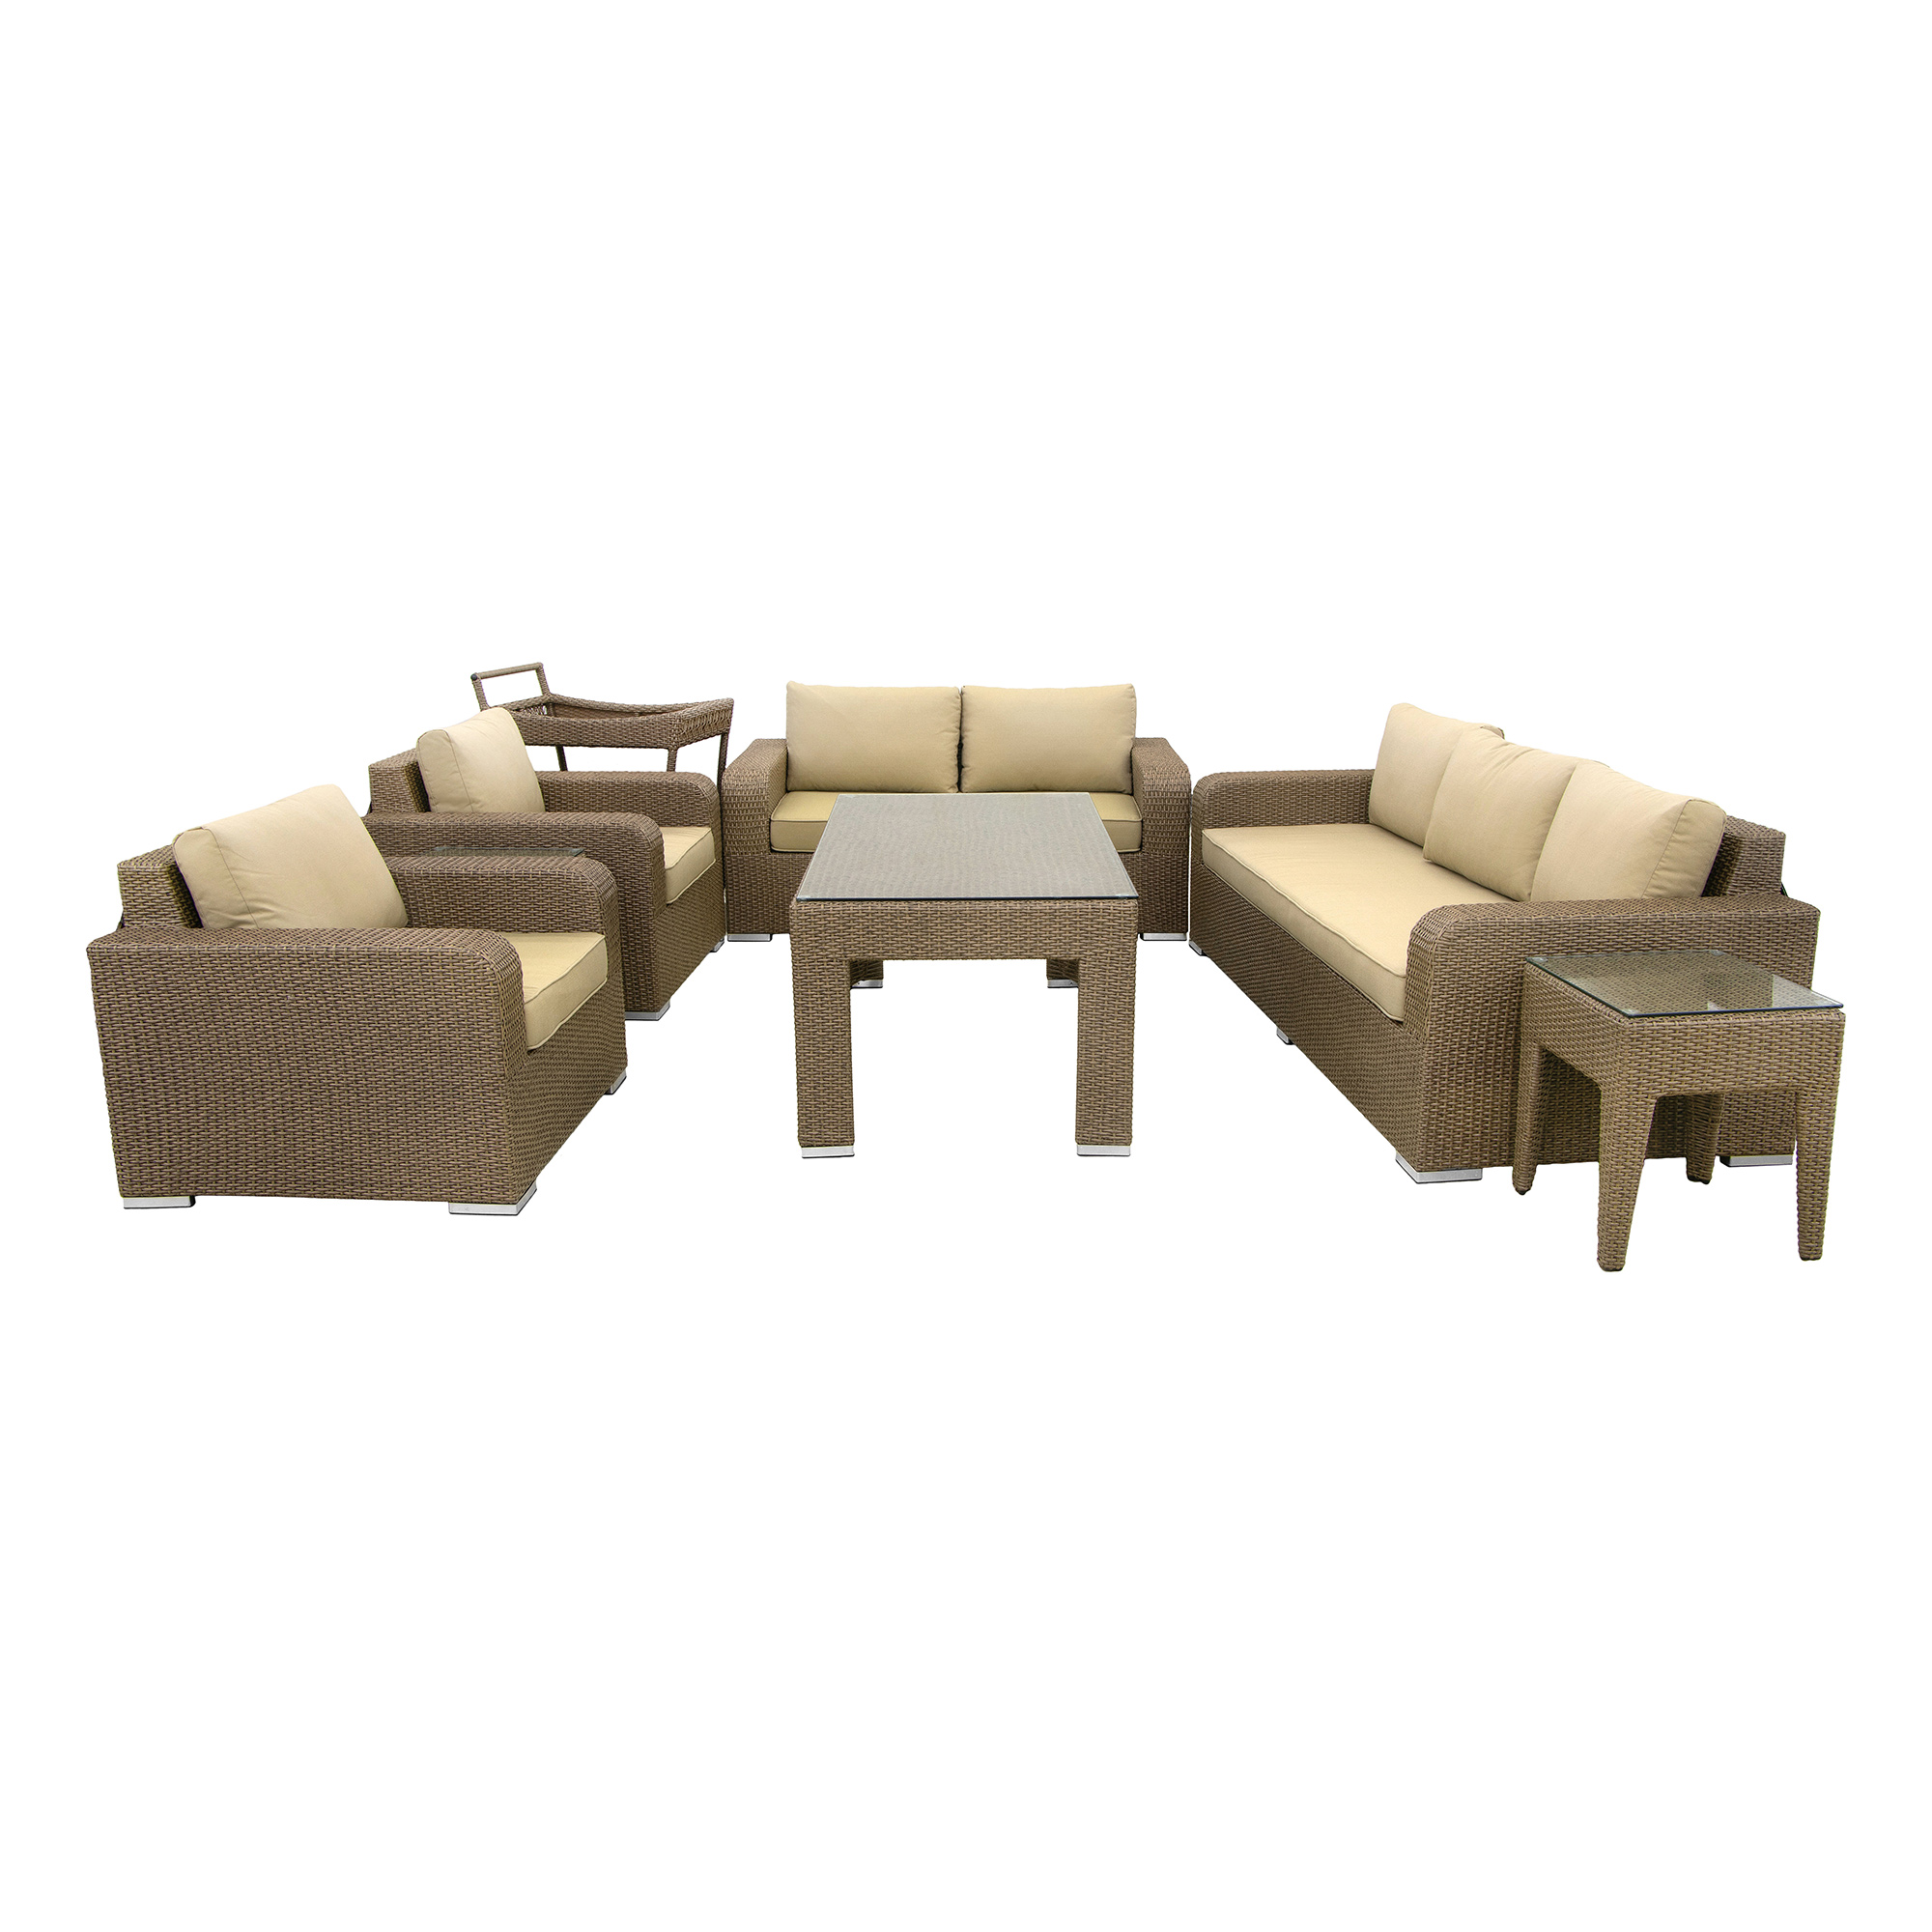 Комплект мебели Mavi Rattan 012 dkst, цвет бежевый, размер диван трехместный 90х224х76 см, диван двухместный 90х159х76 см - фото 1